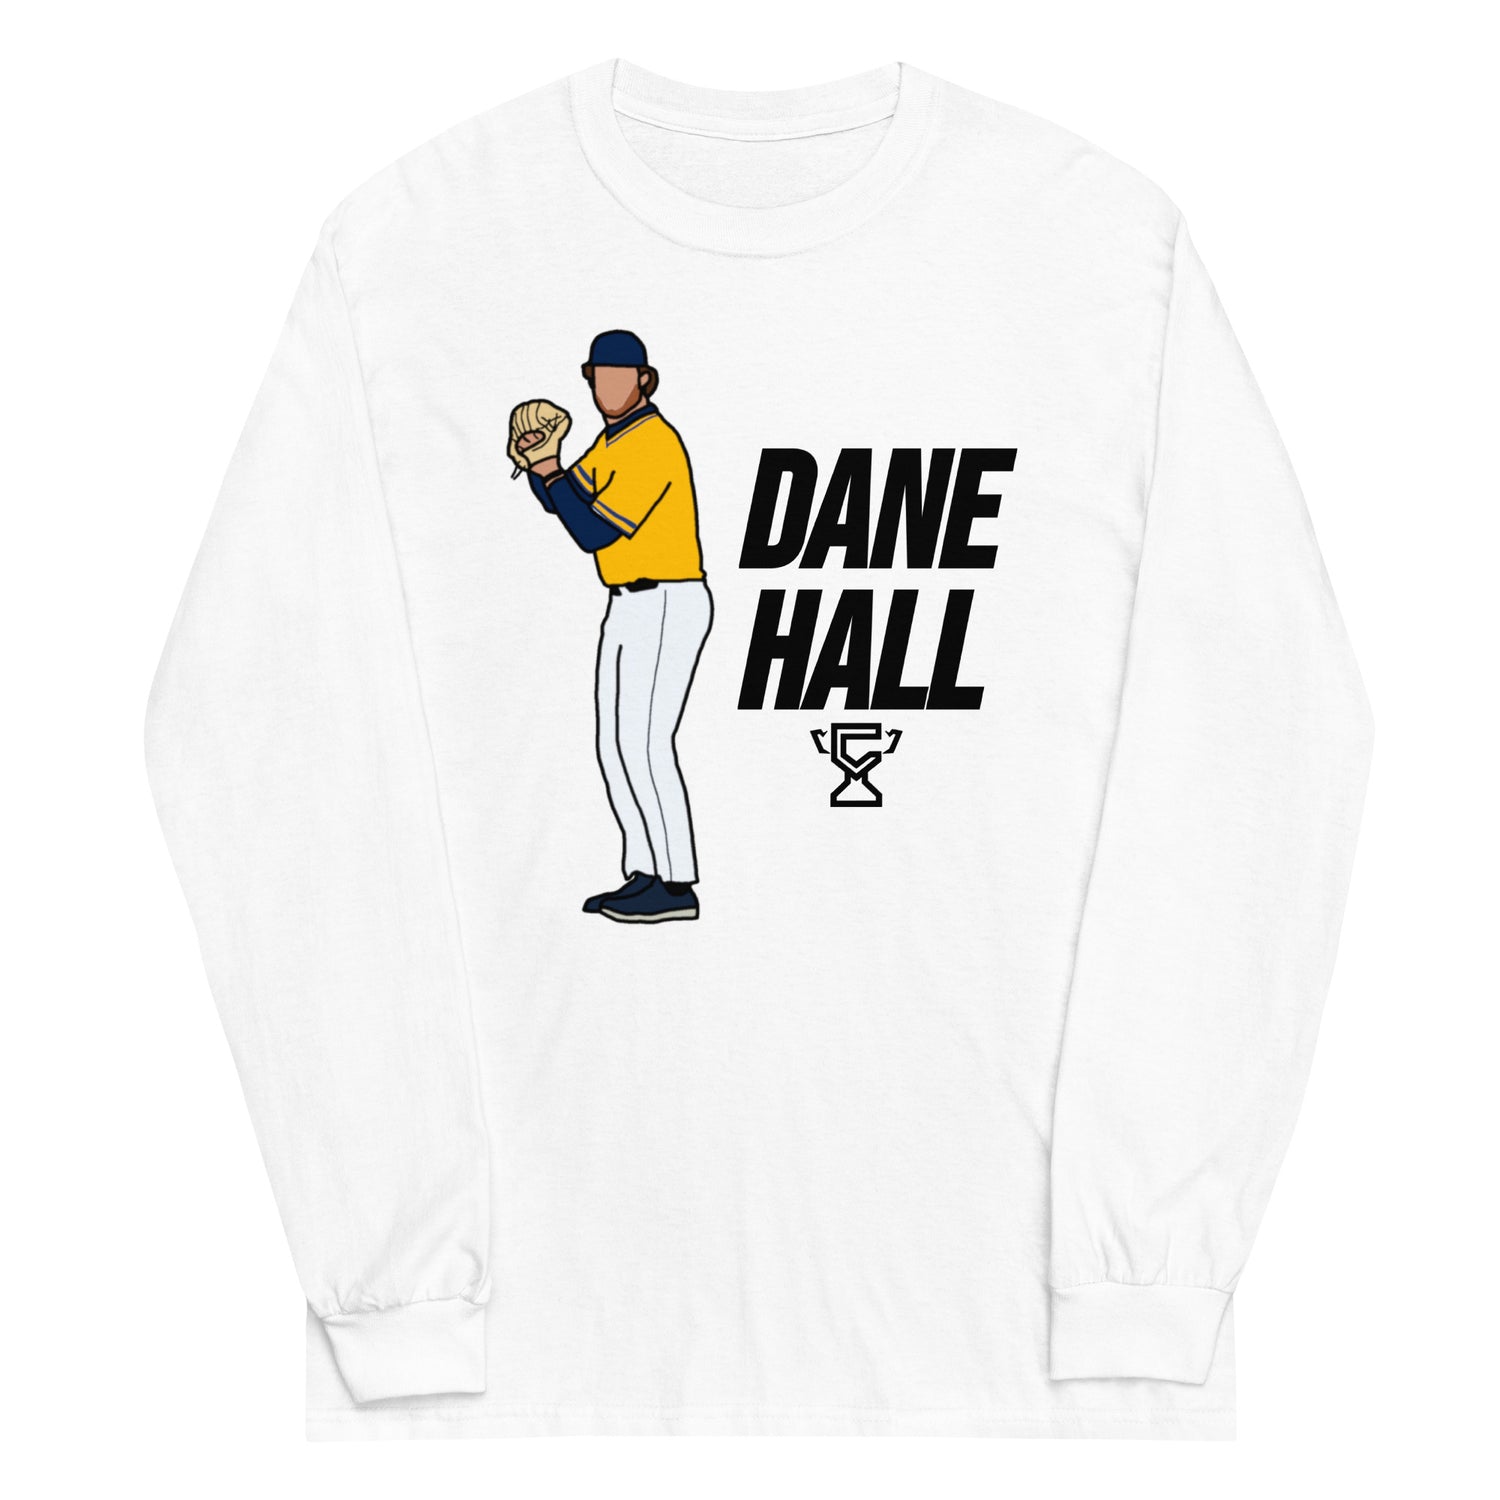 White long sleeve shirt featuring art of Dane Hall.